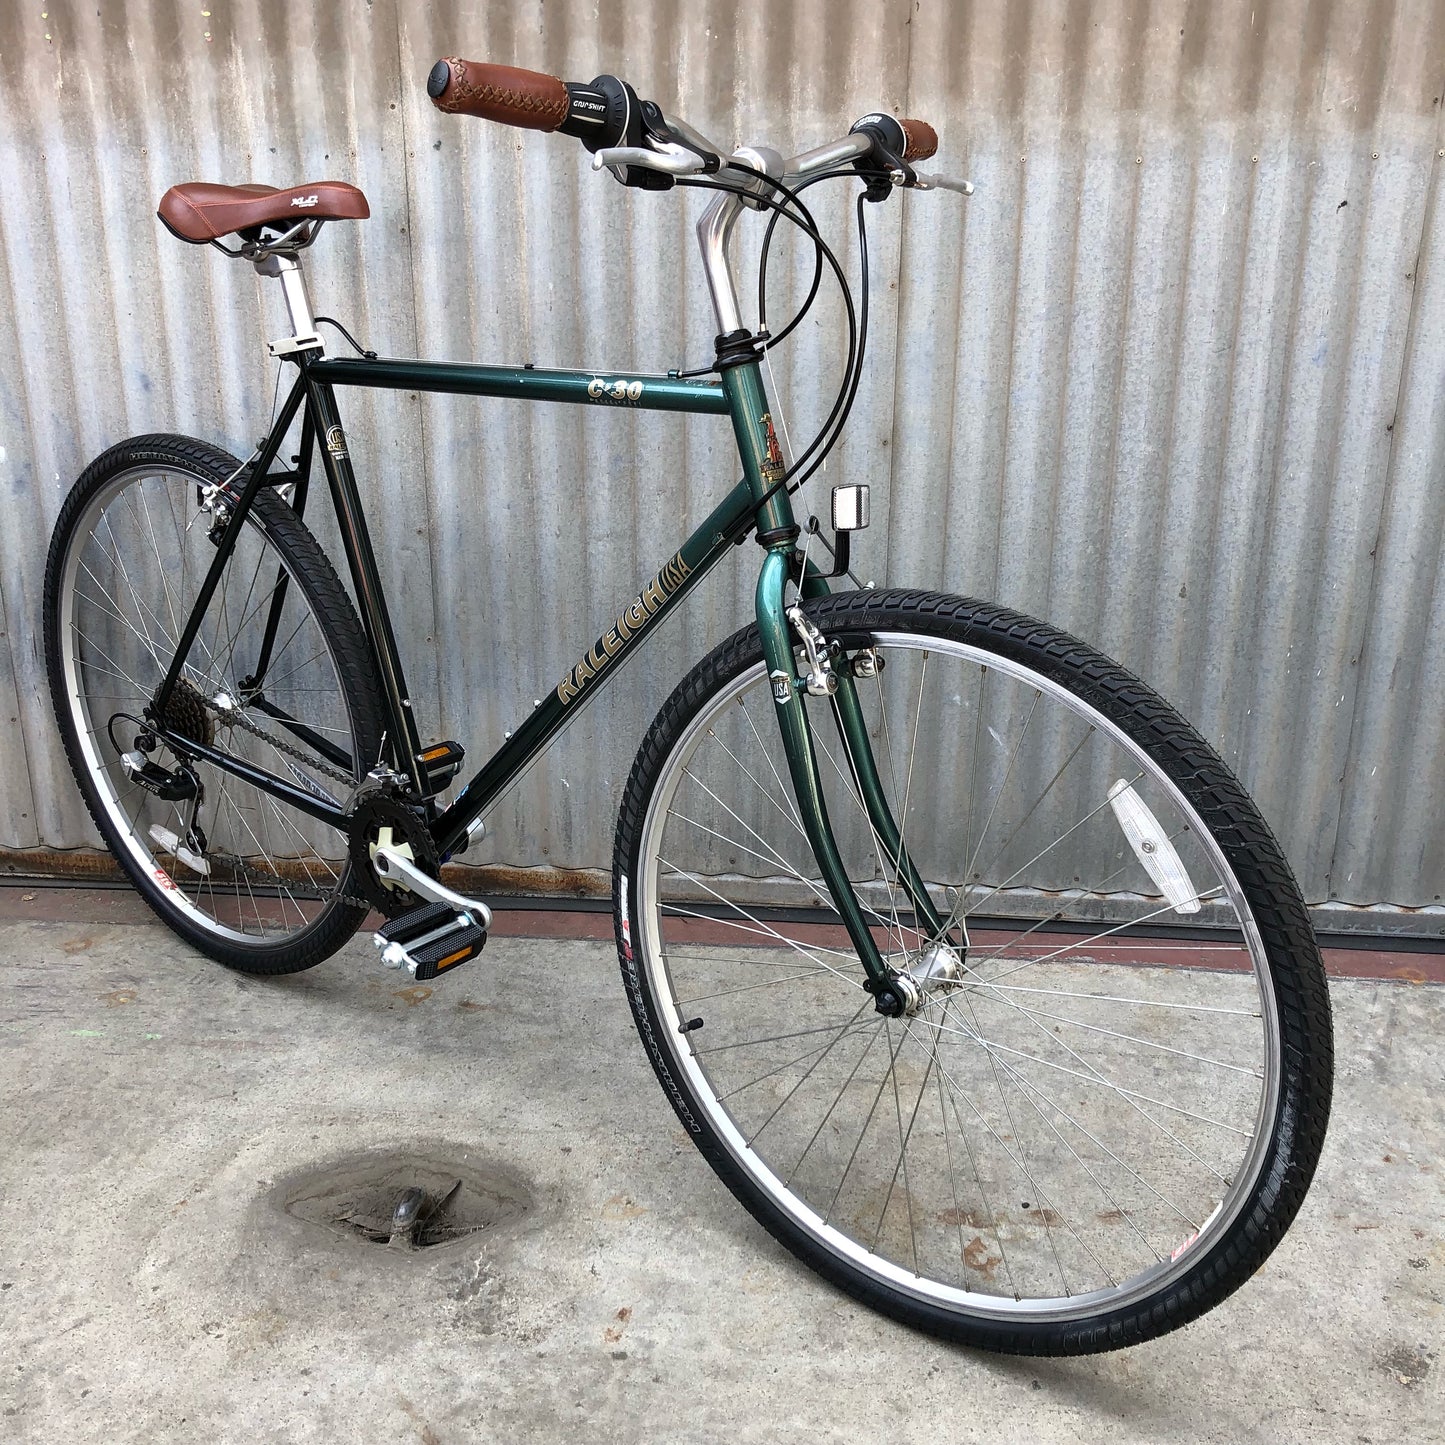 Raliegh Classic City Bike - Clean, Attractive, Good Color, Sensible